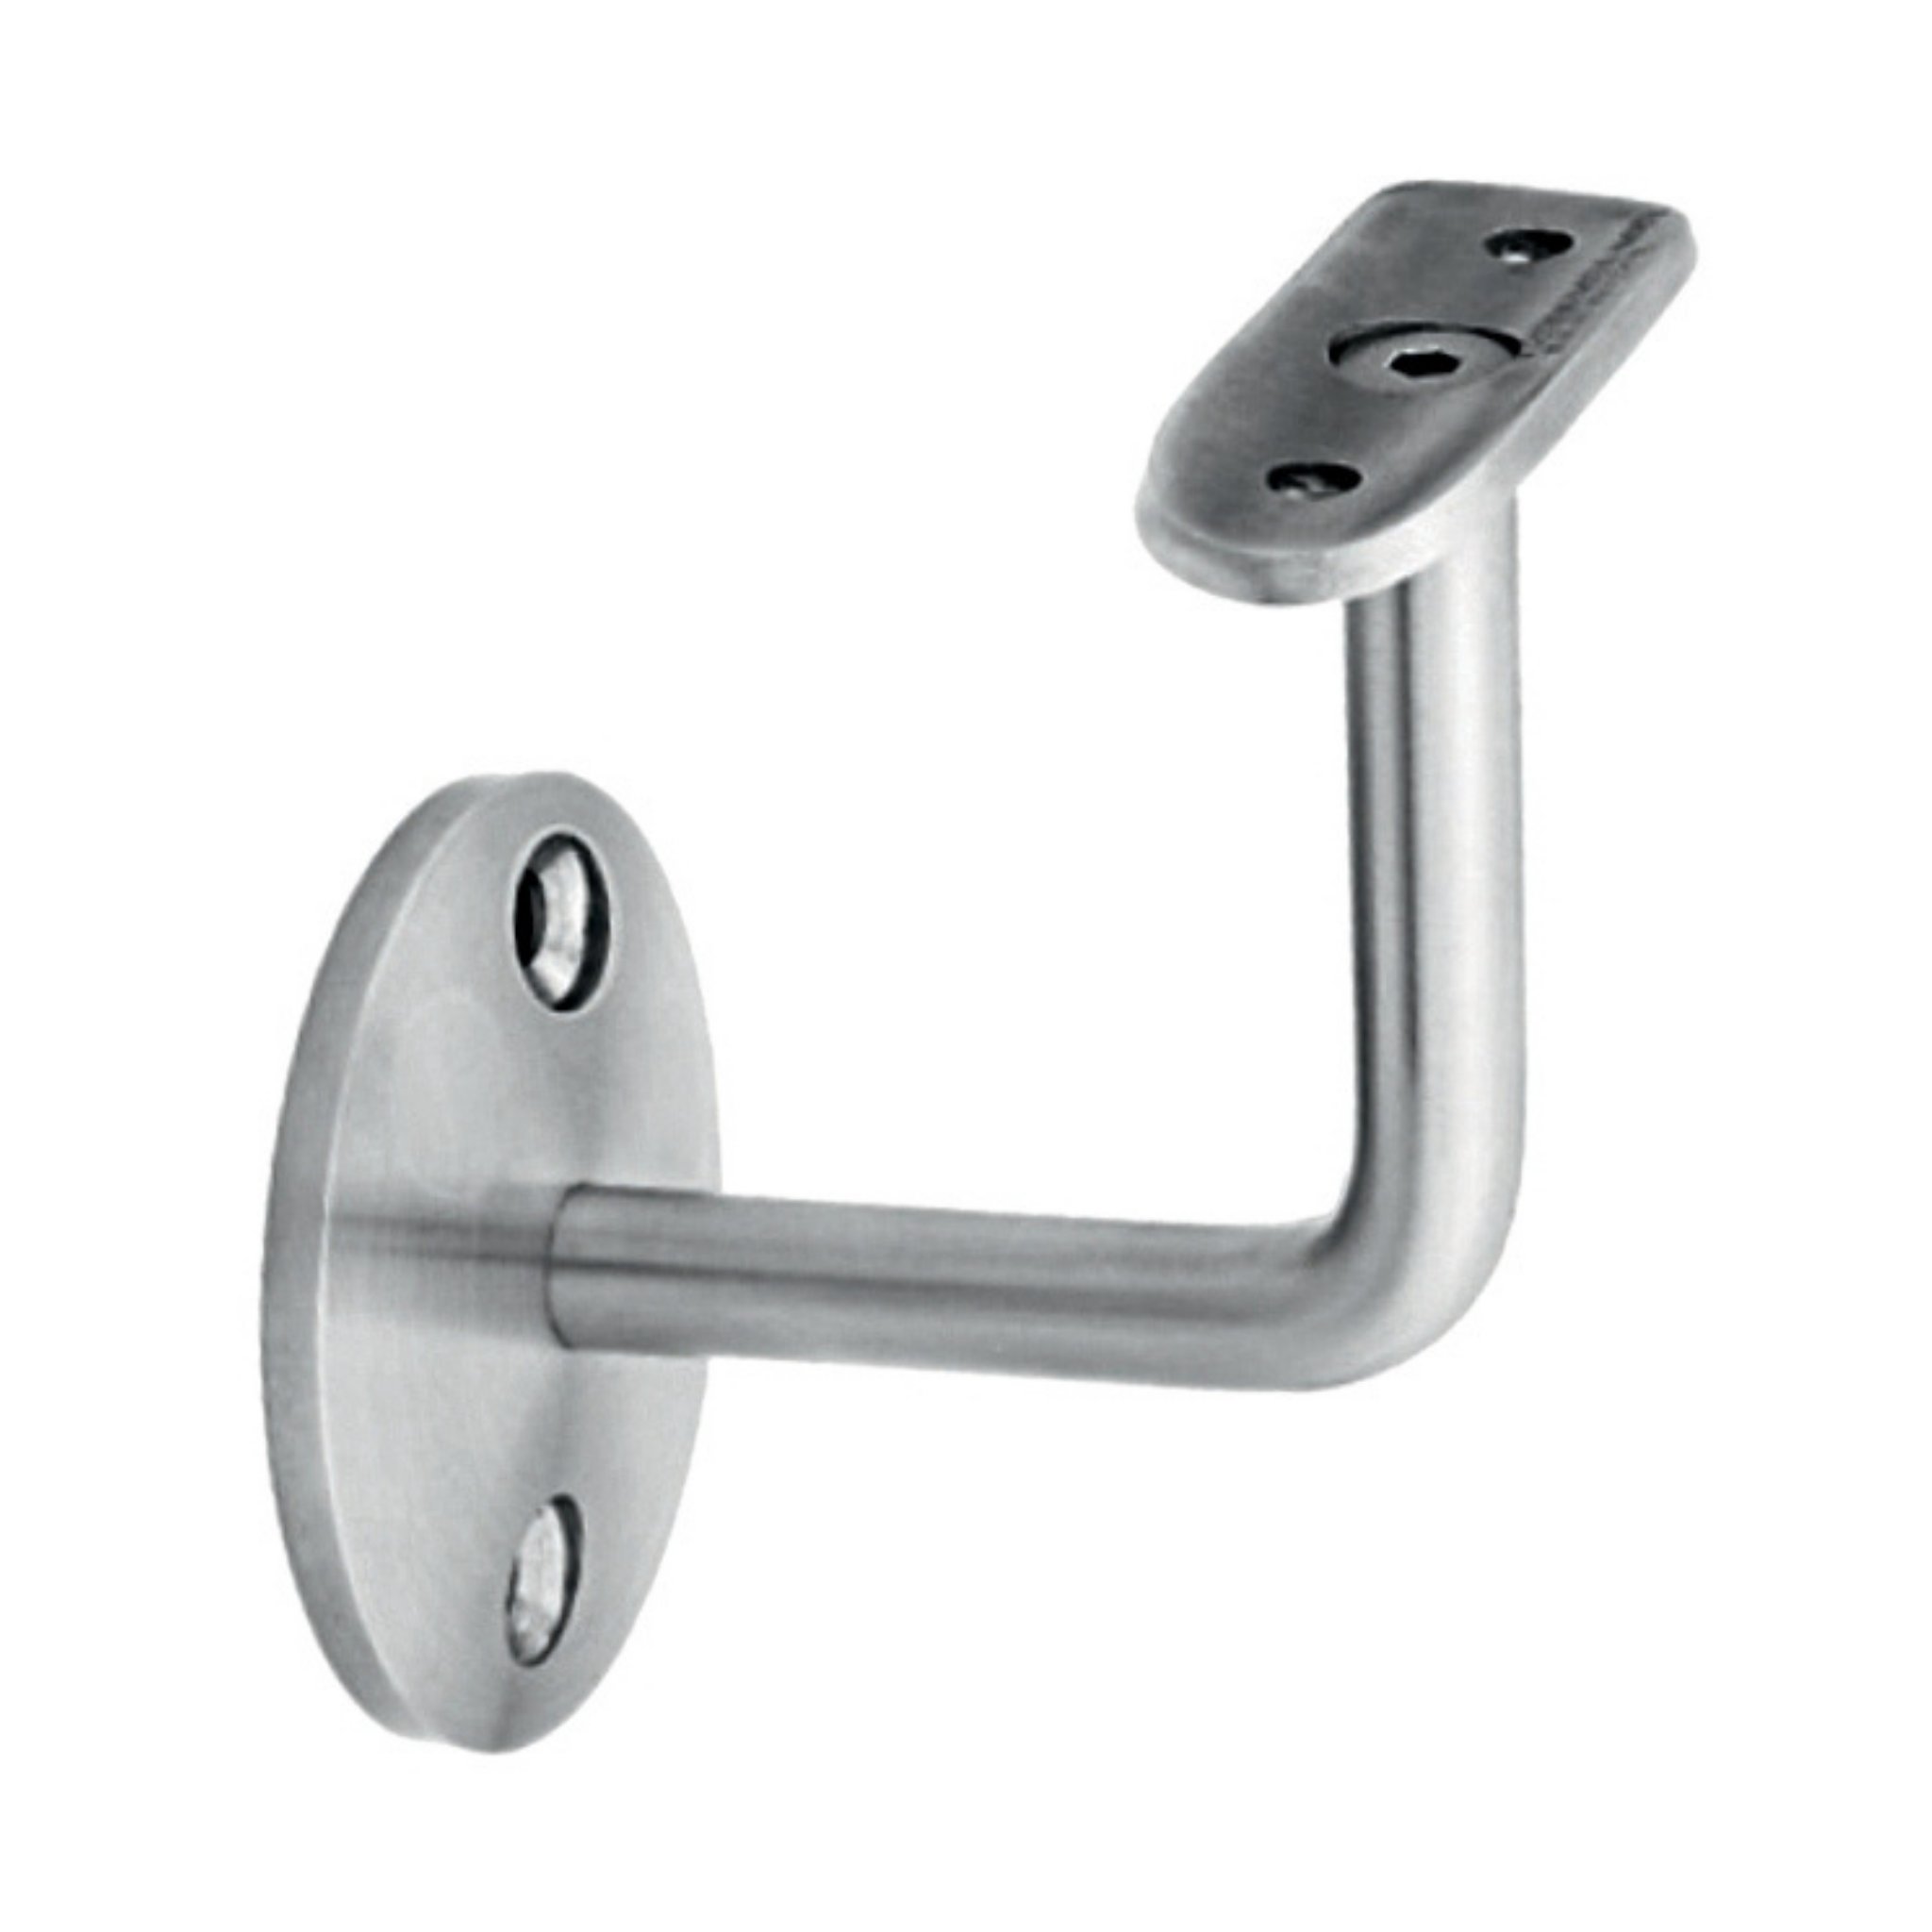 Handrail holder - StroFIX